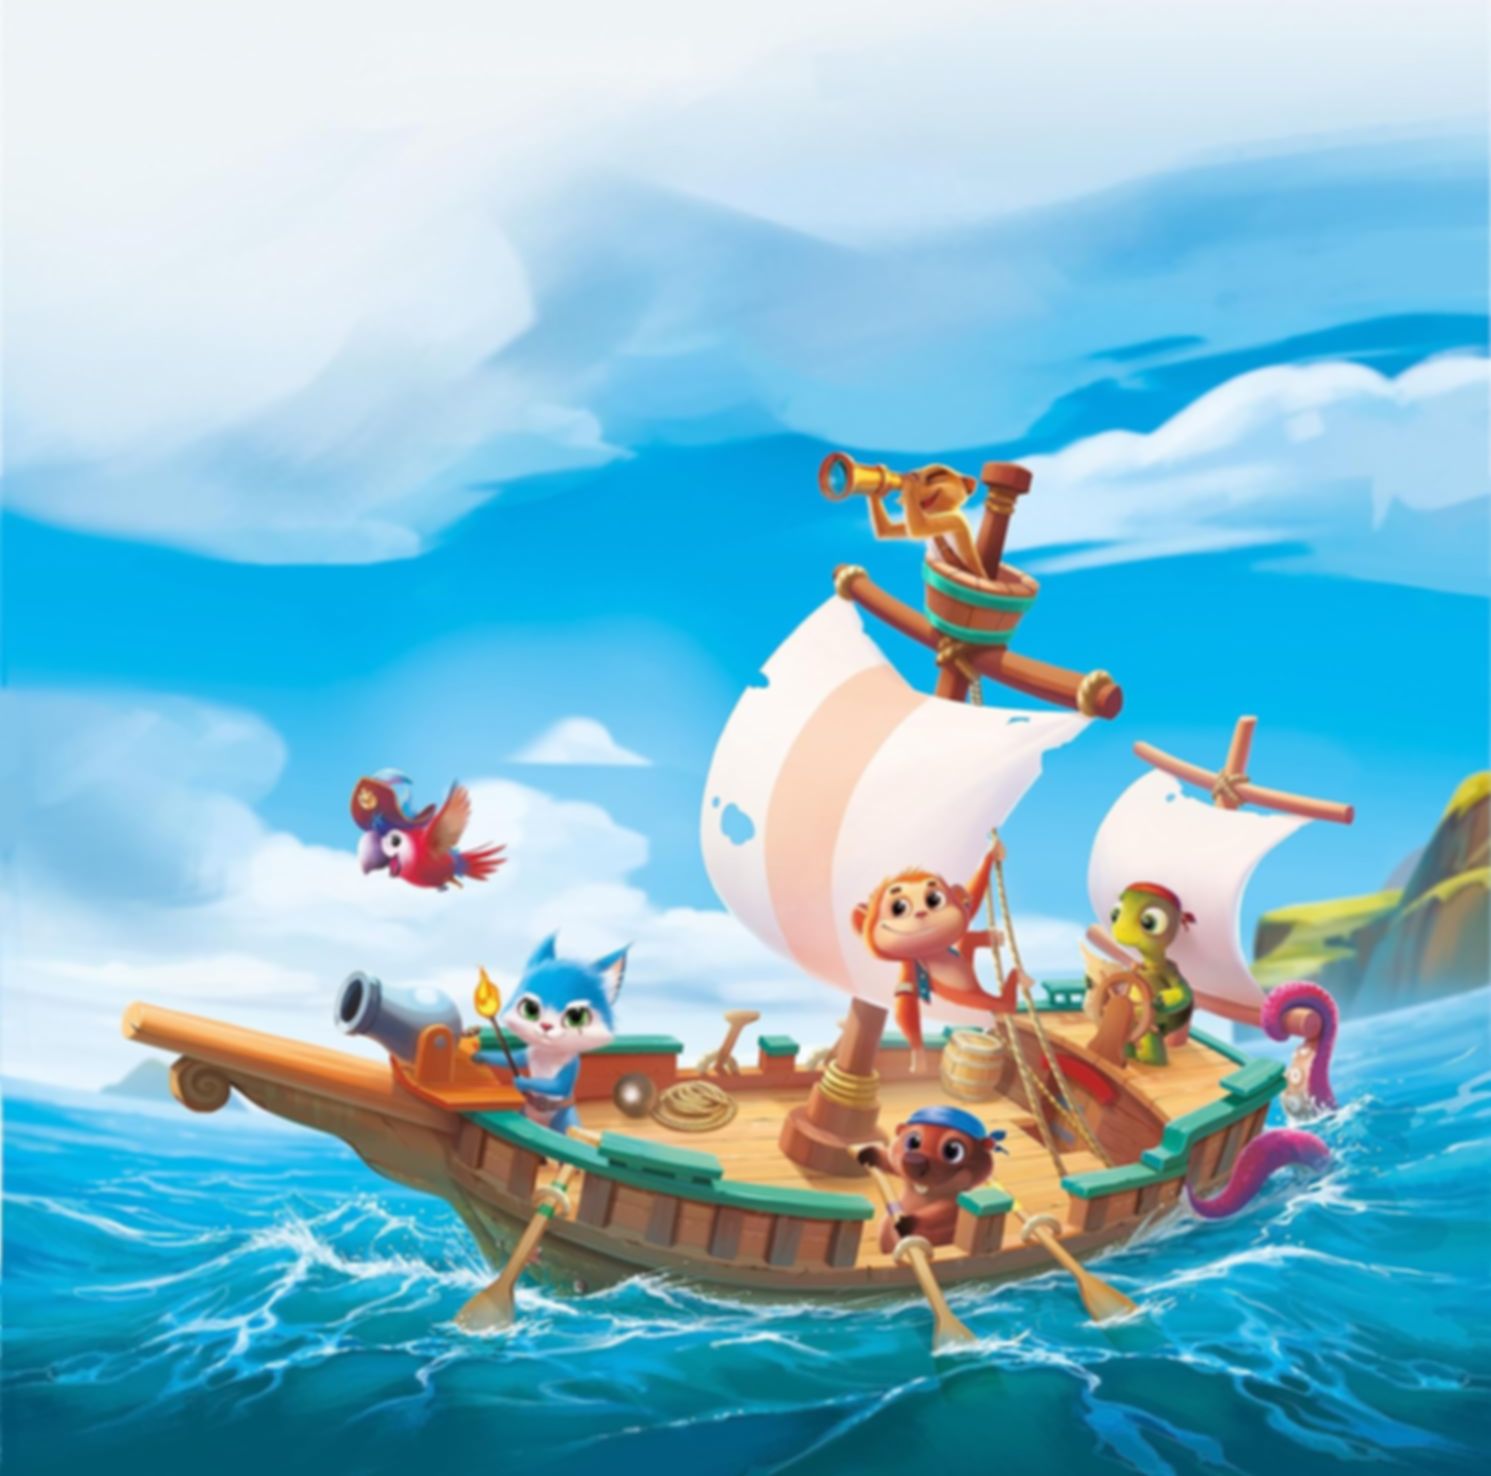 Capt'n Pepe: Treasure Ahoy!